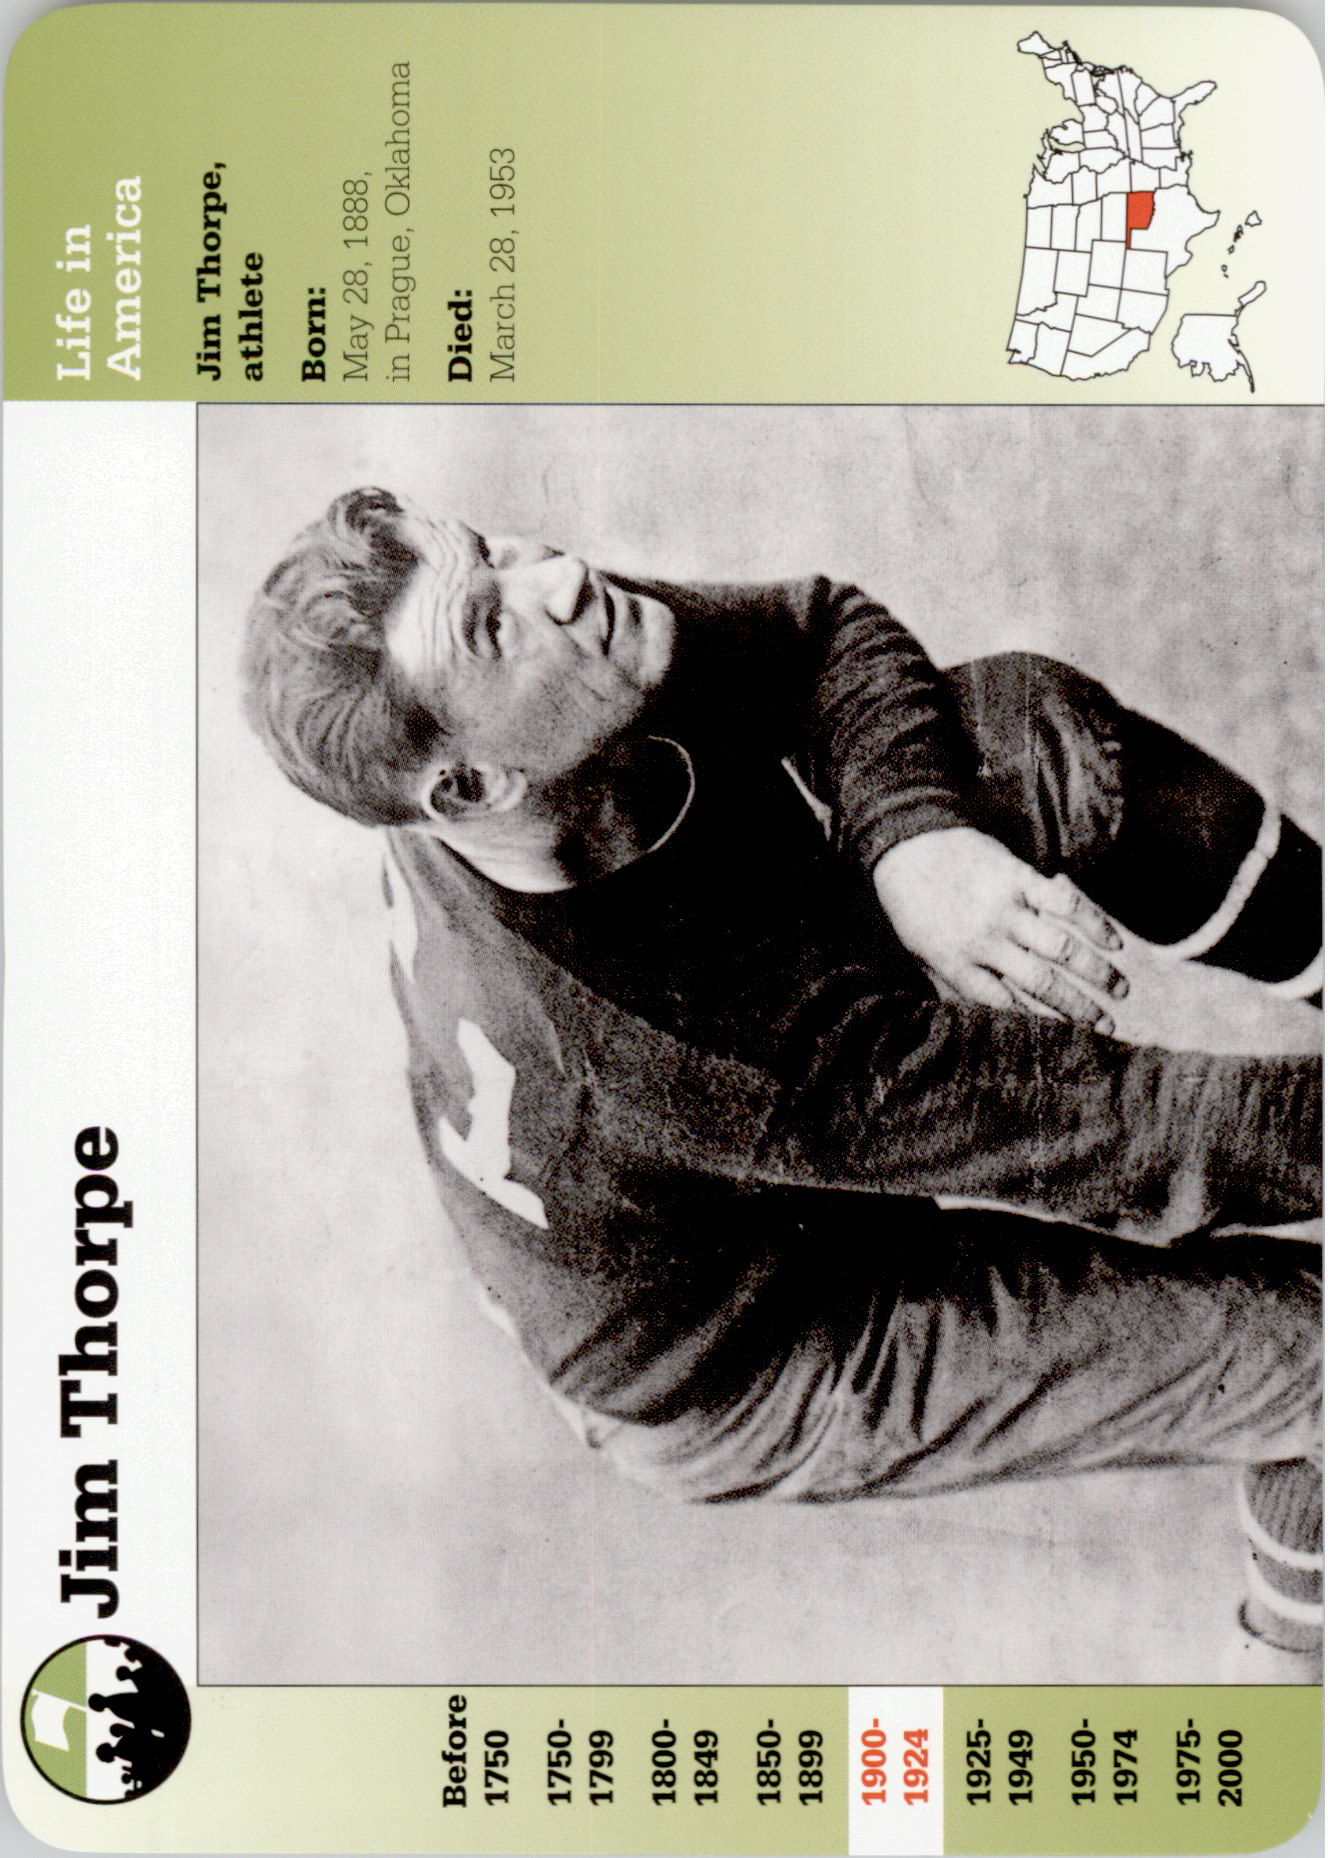  Jim NFL Thorpe player image